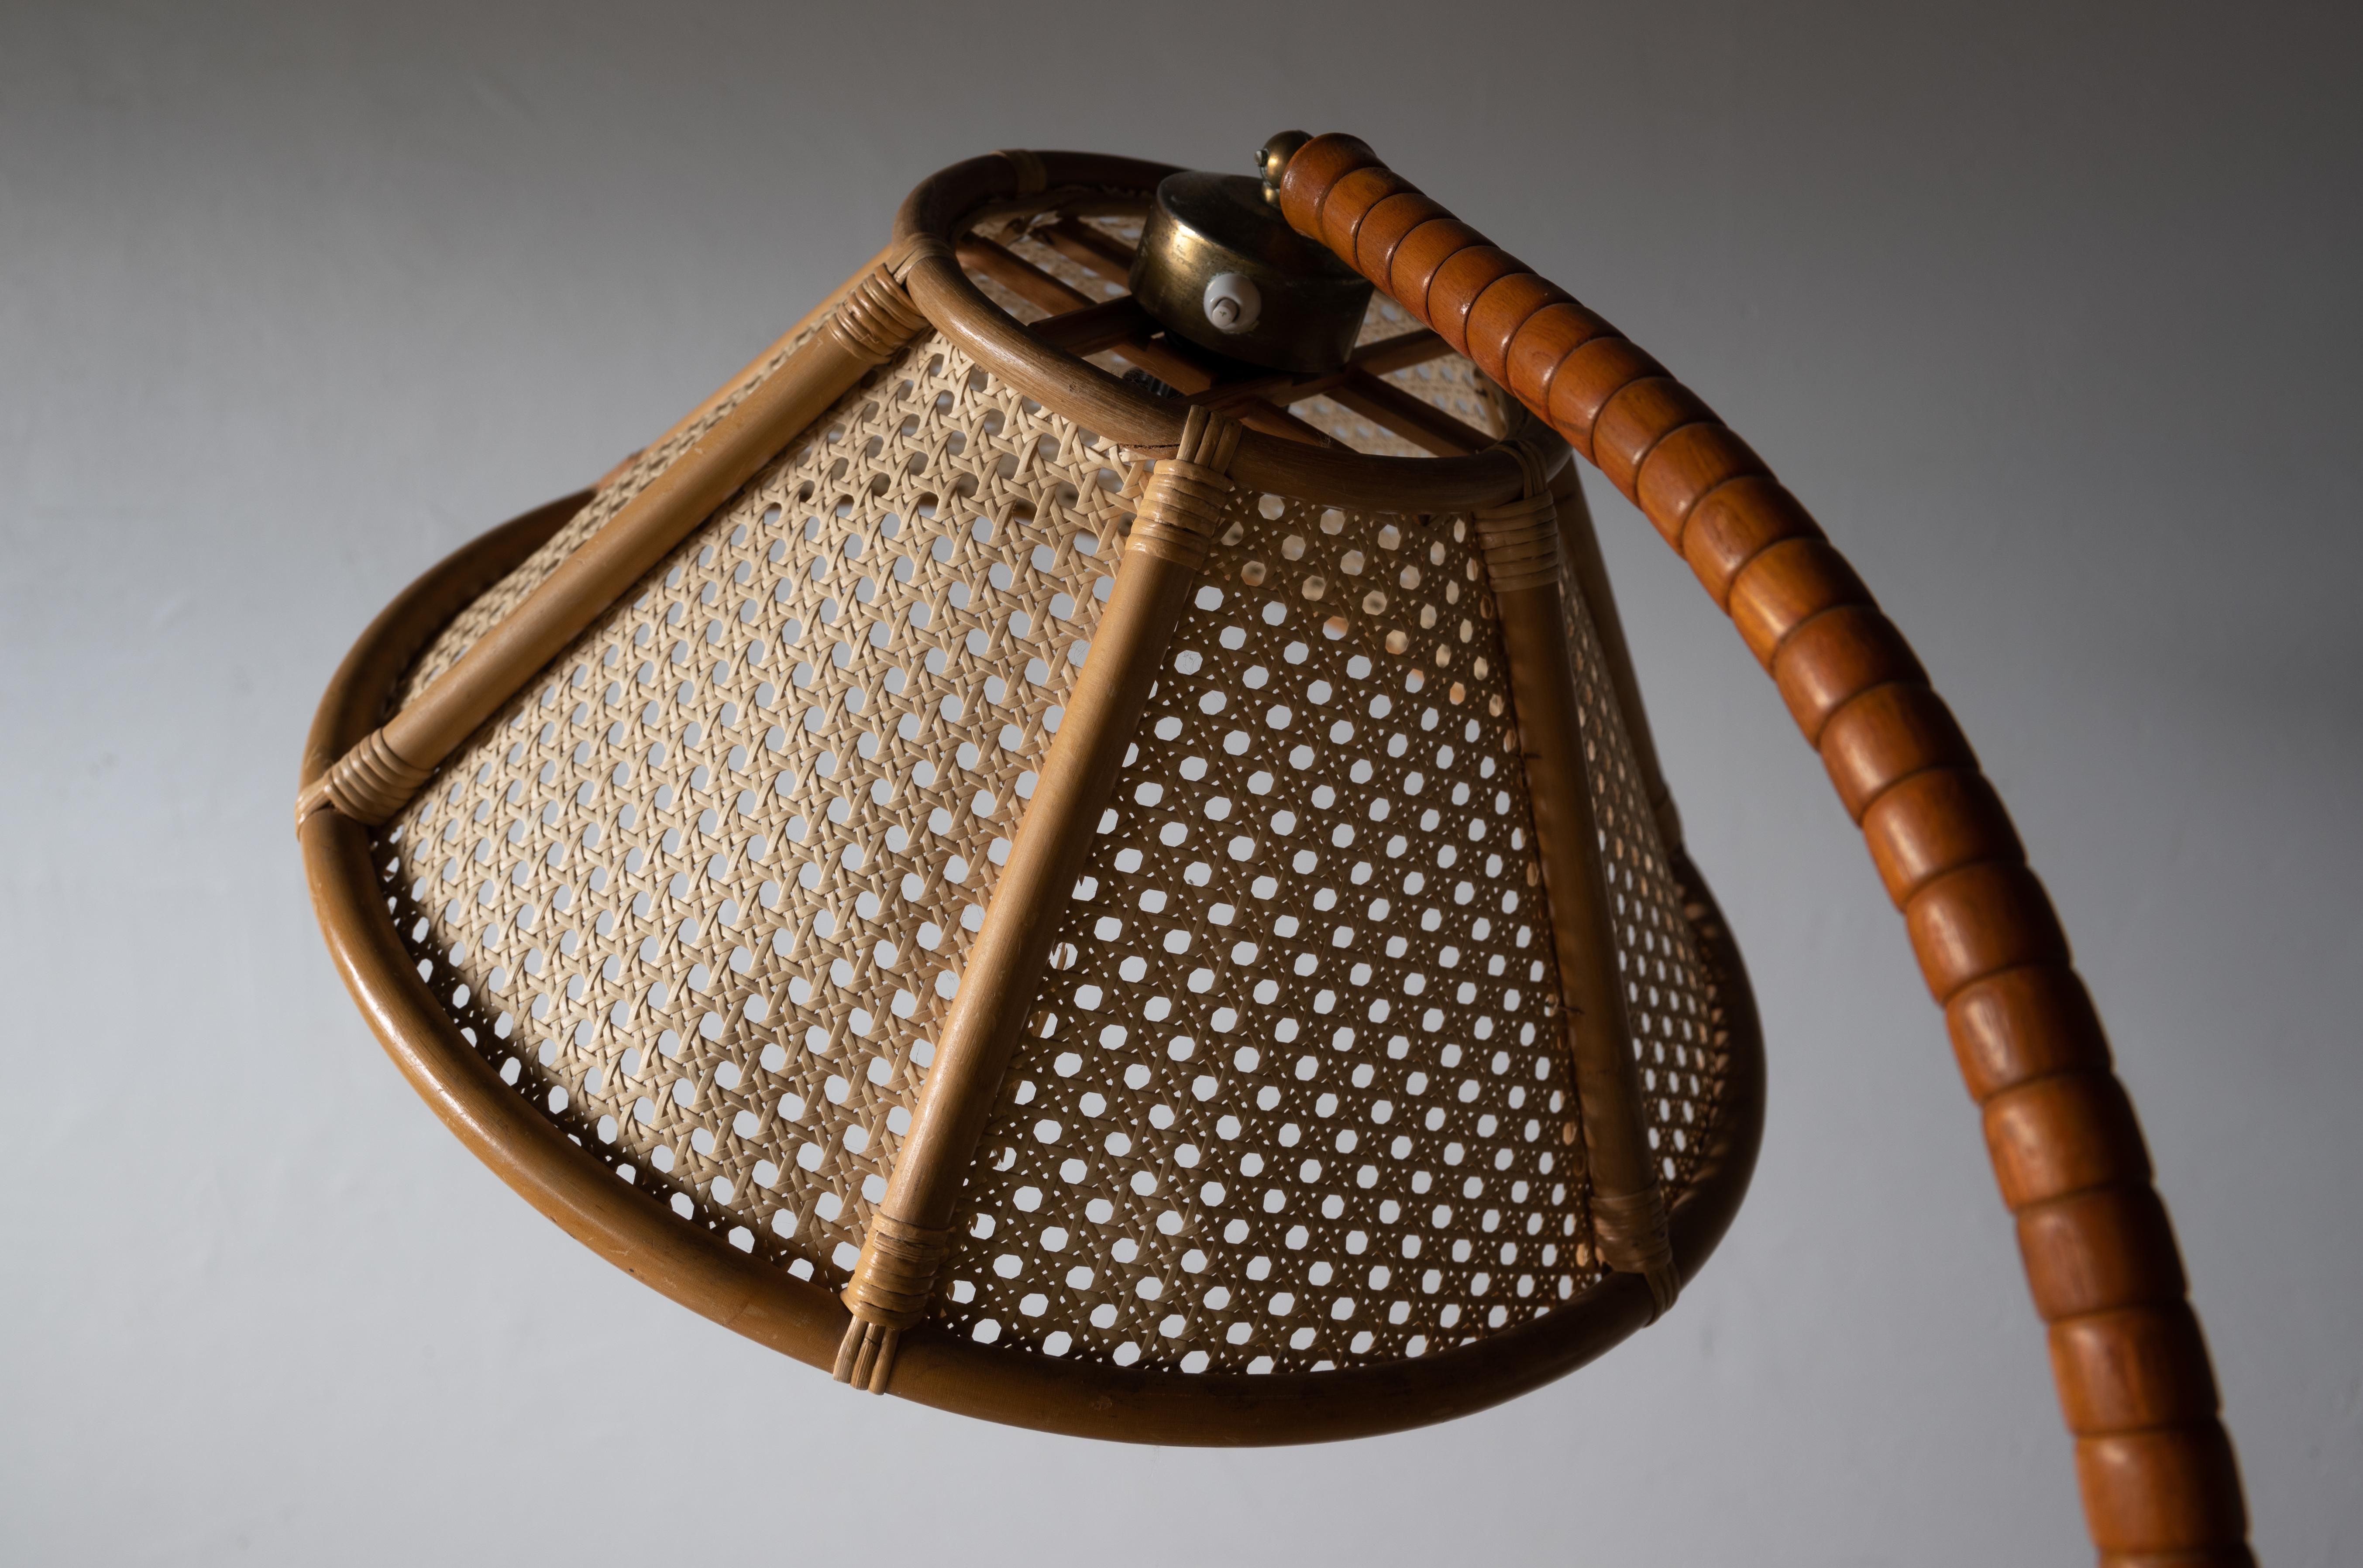 Scandinavian Modern Swedish, Adjustable Organic Floor Lamp, Wood, Brass, Bamboo Rattan, Sweden 1940s